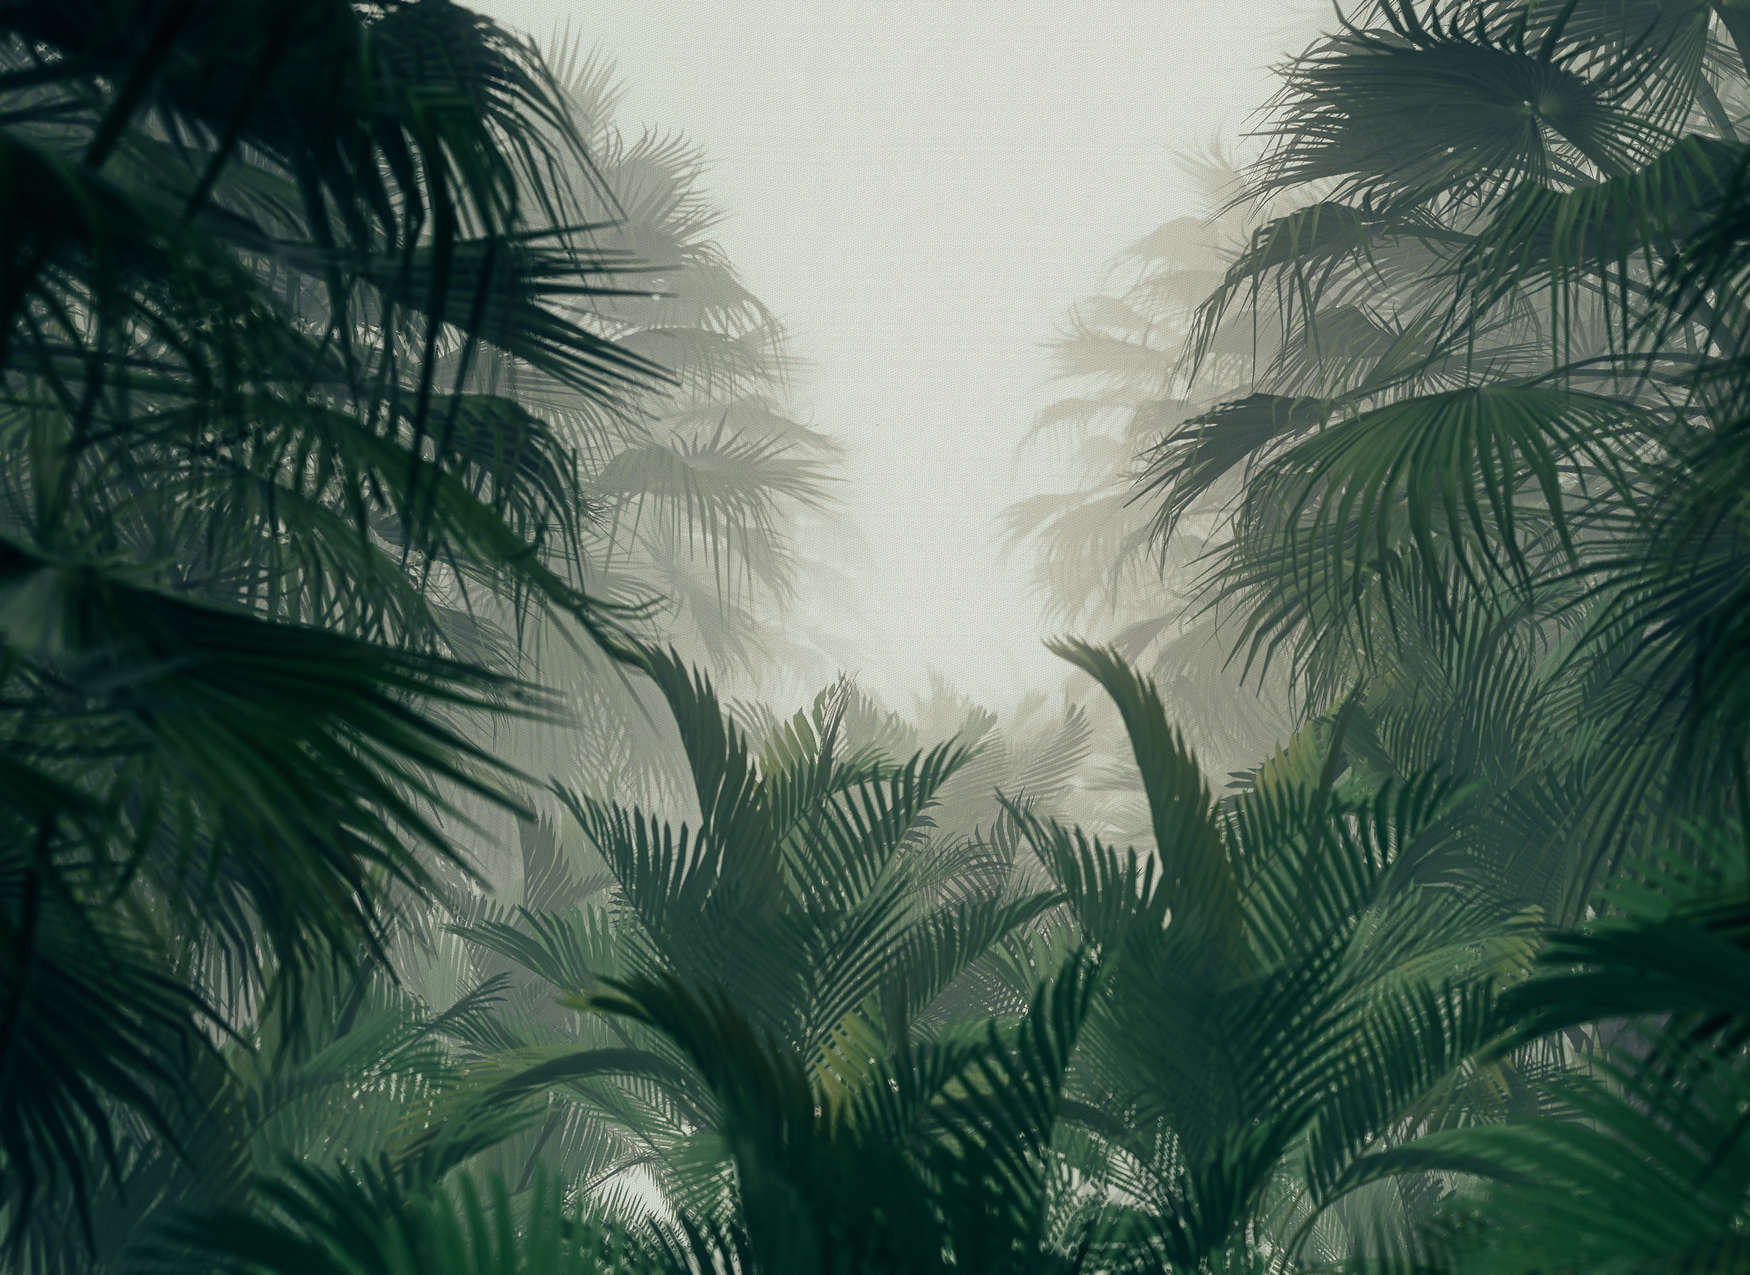             Papel pintado "Rainy Season Jungle View" - Verde, Gris
        